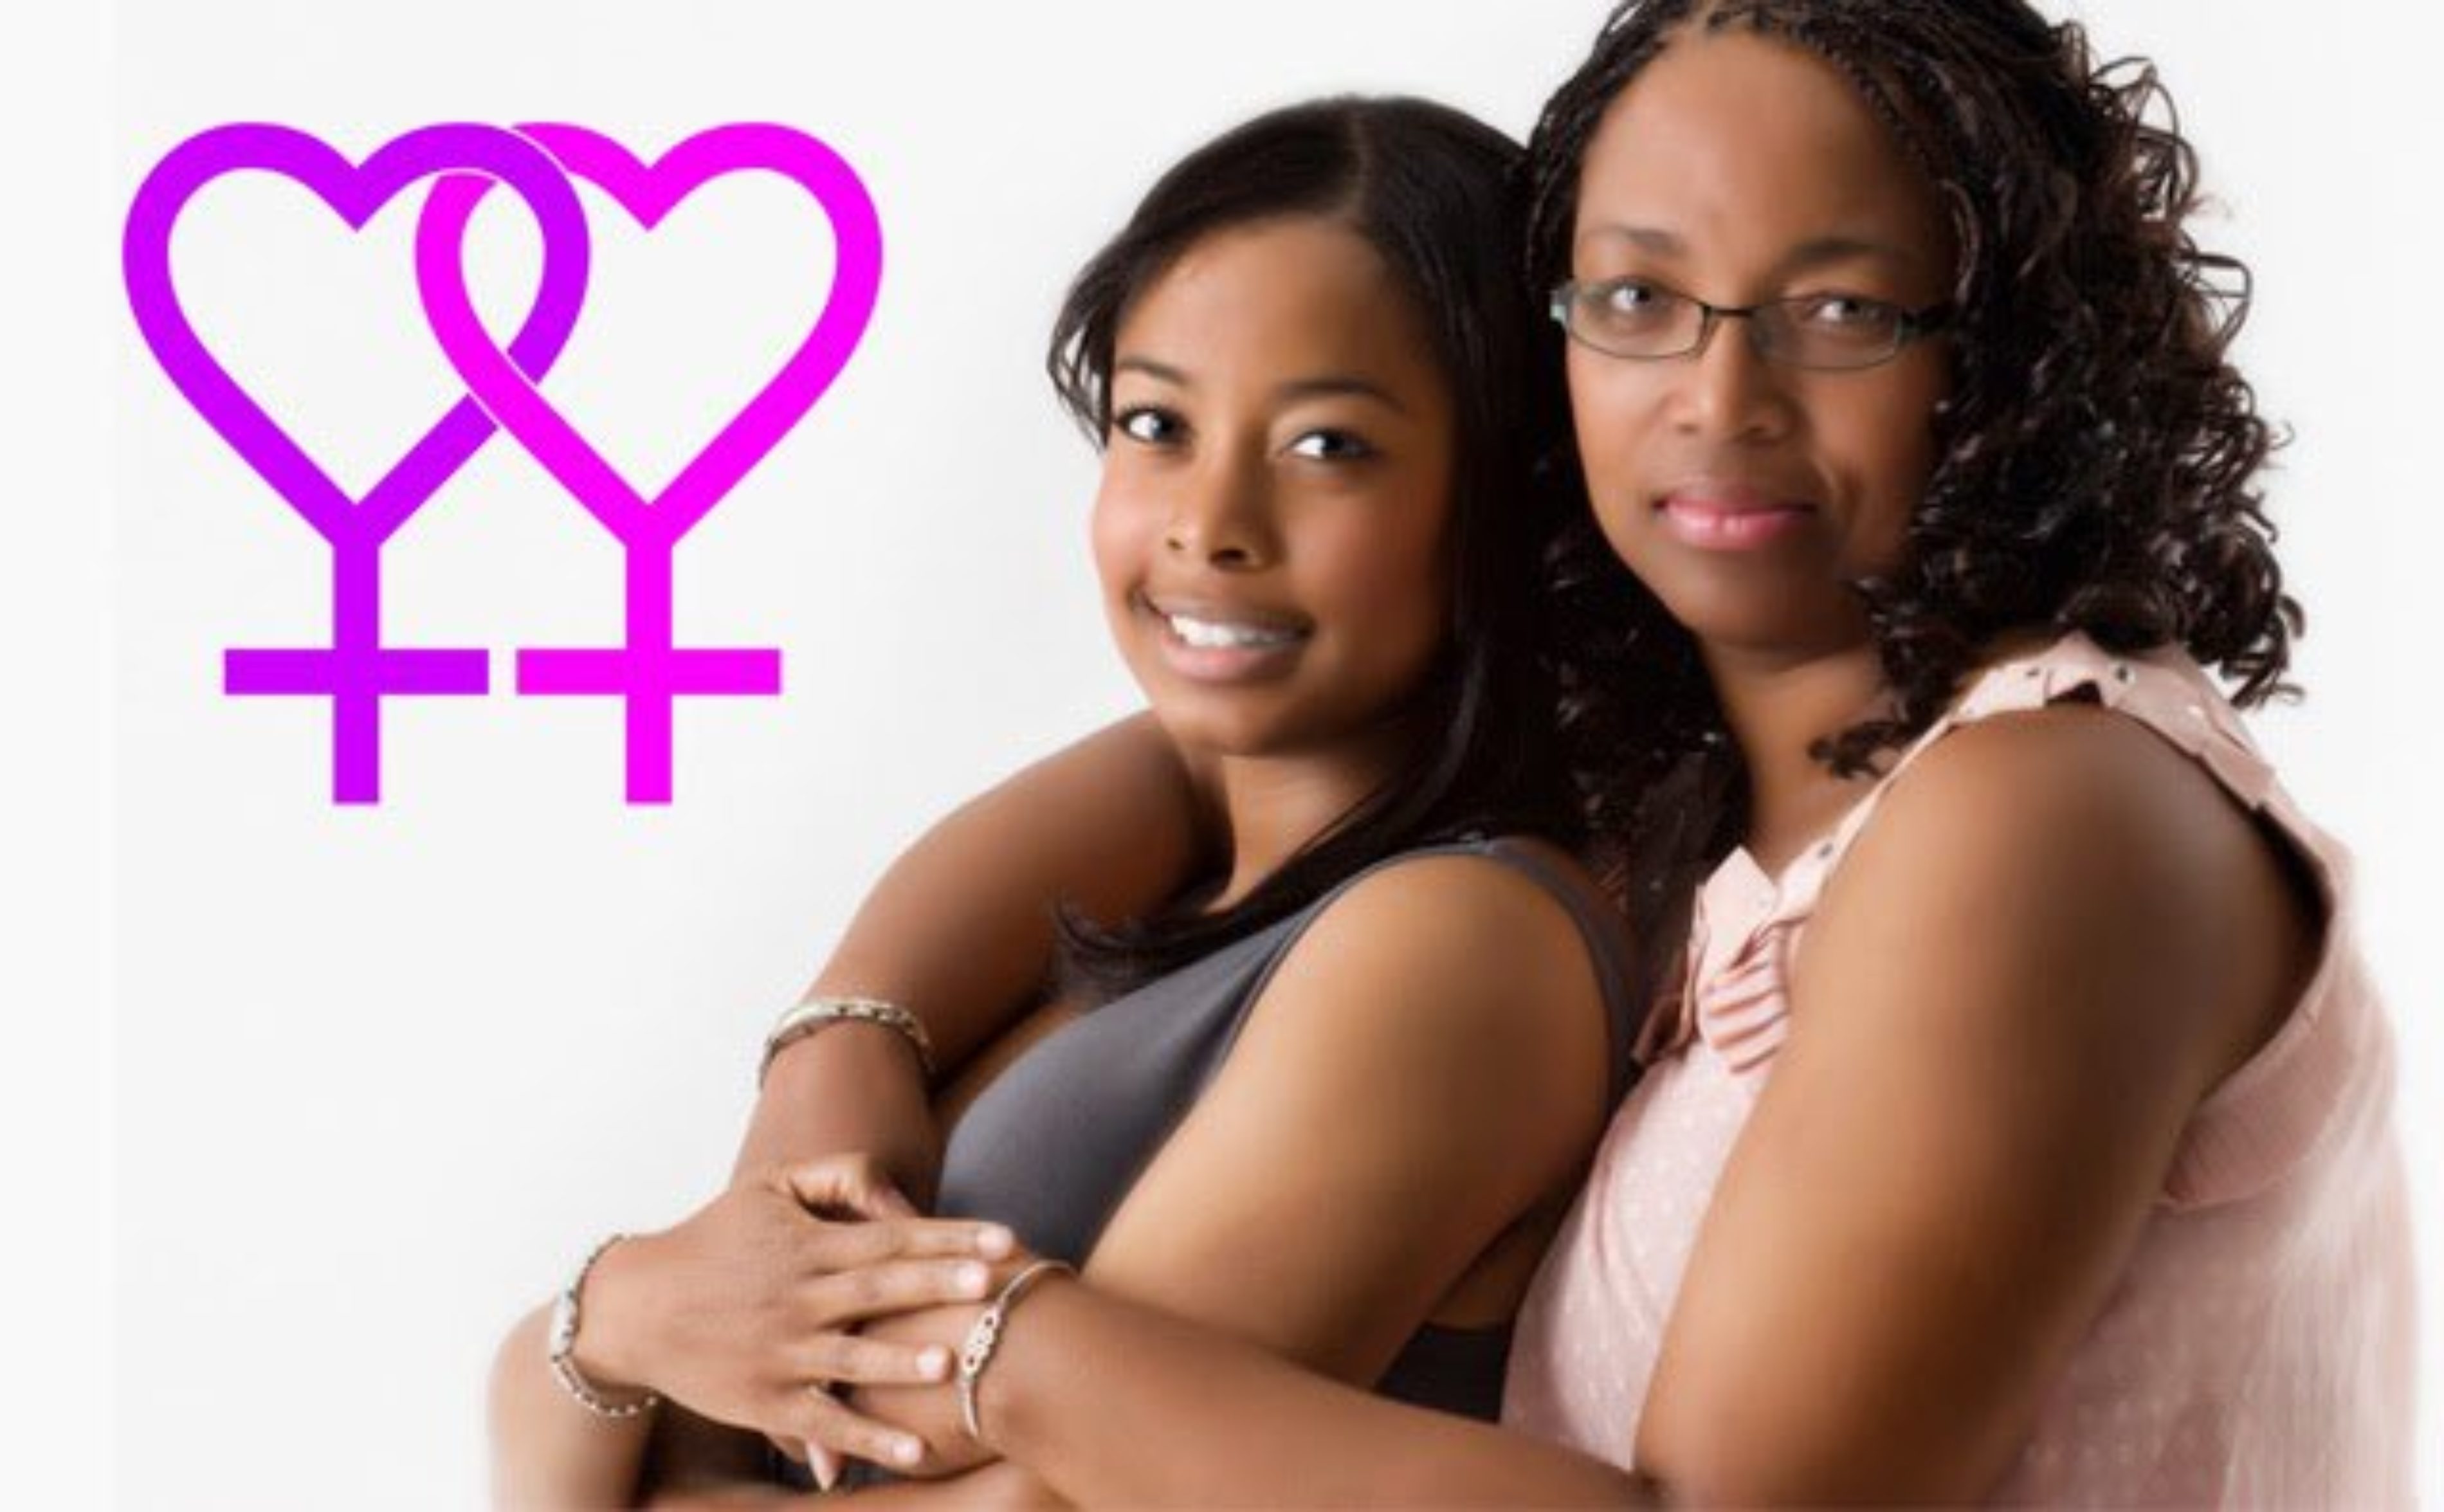 Free chat lesbian interacial friendships